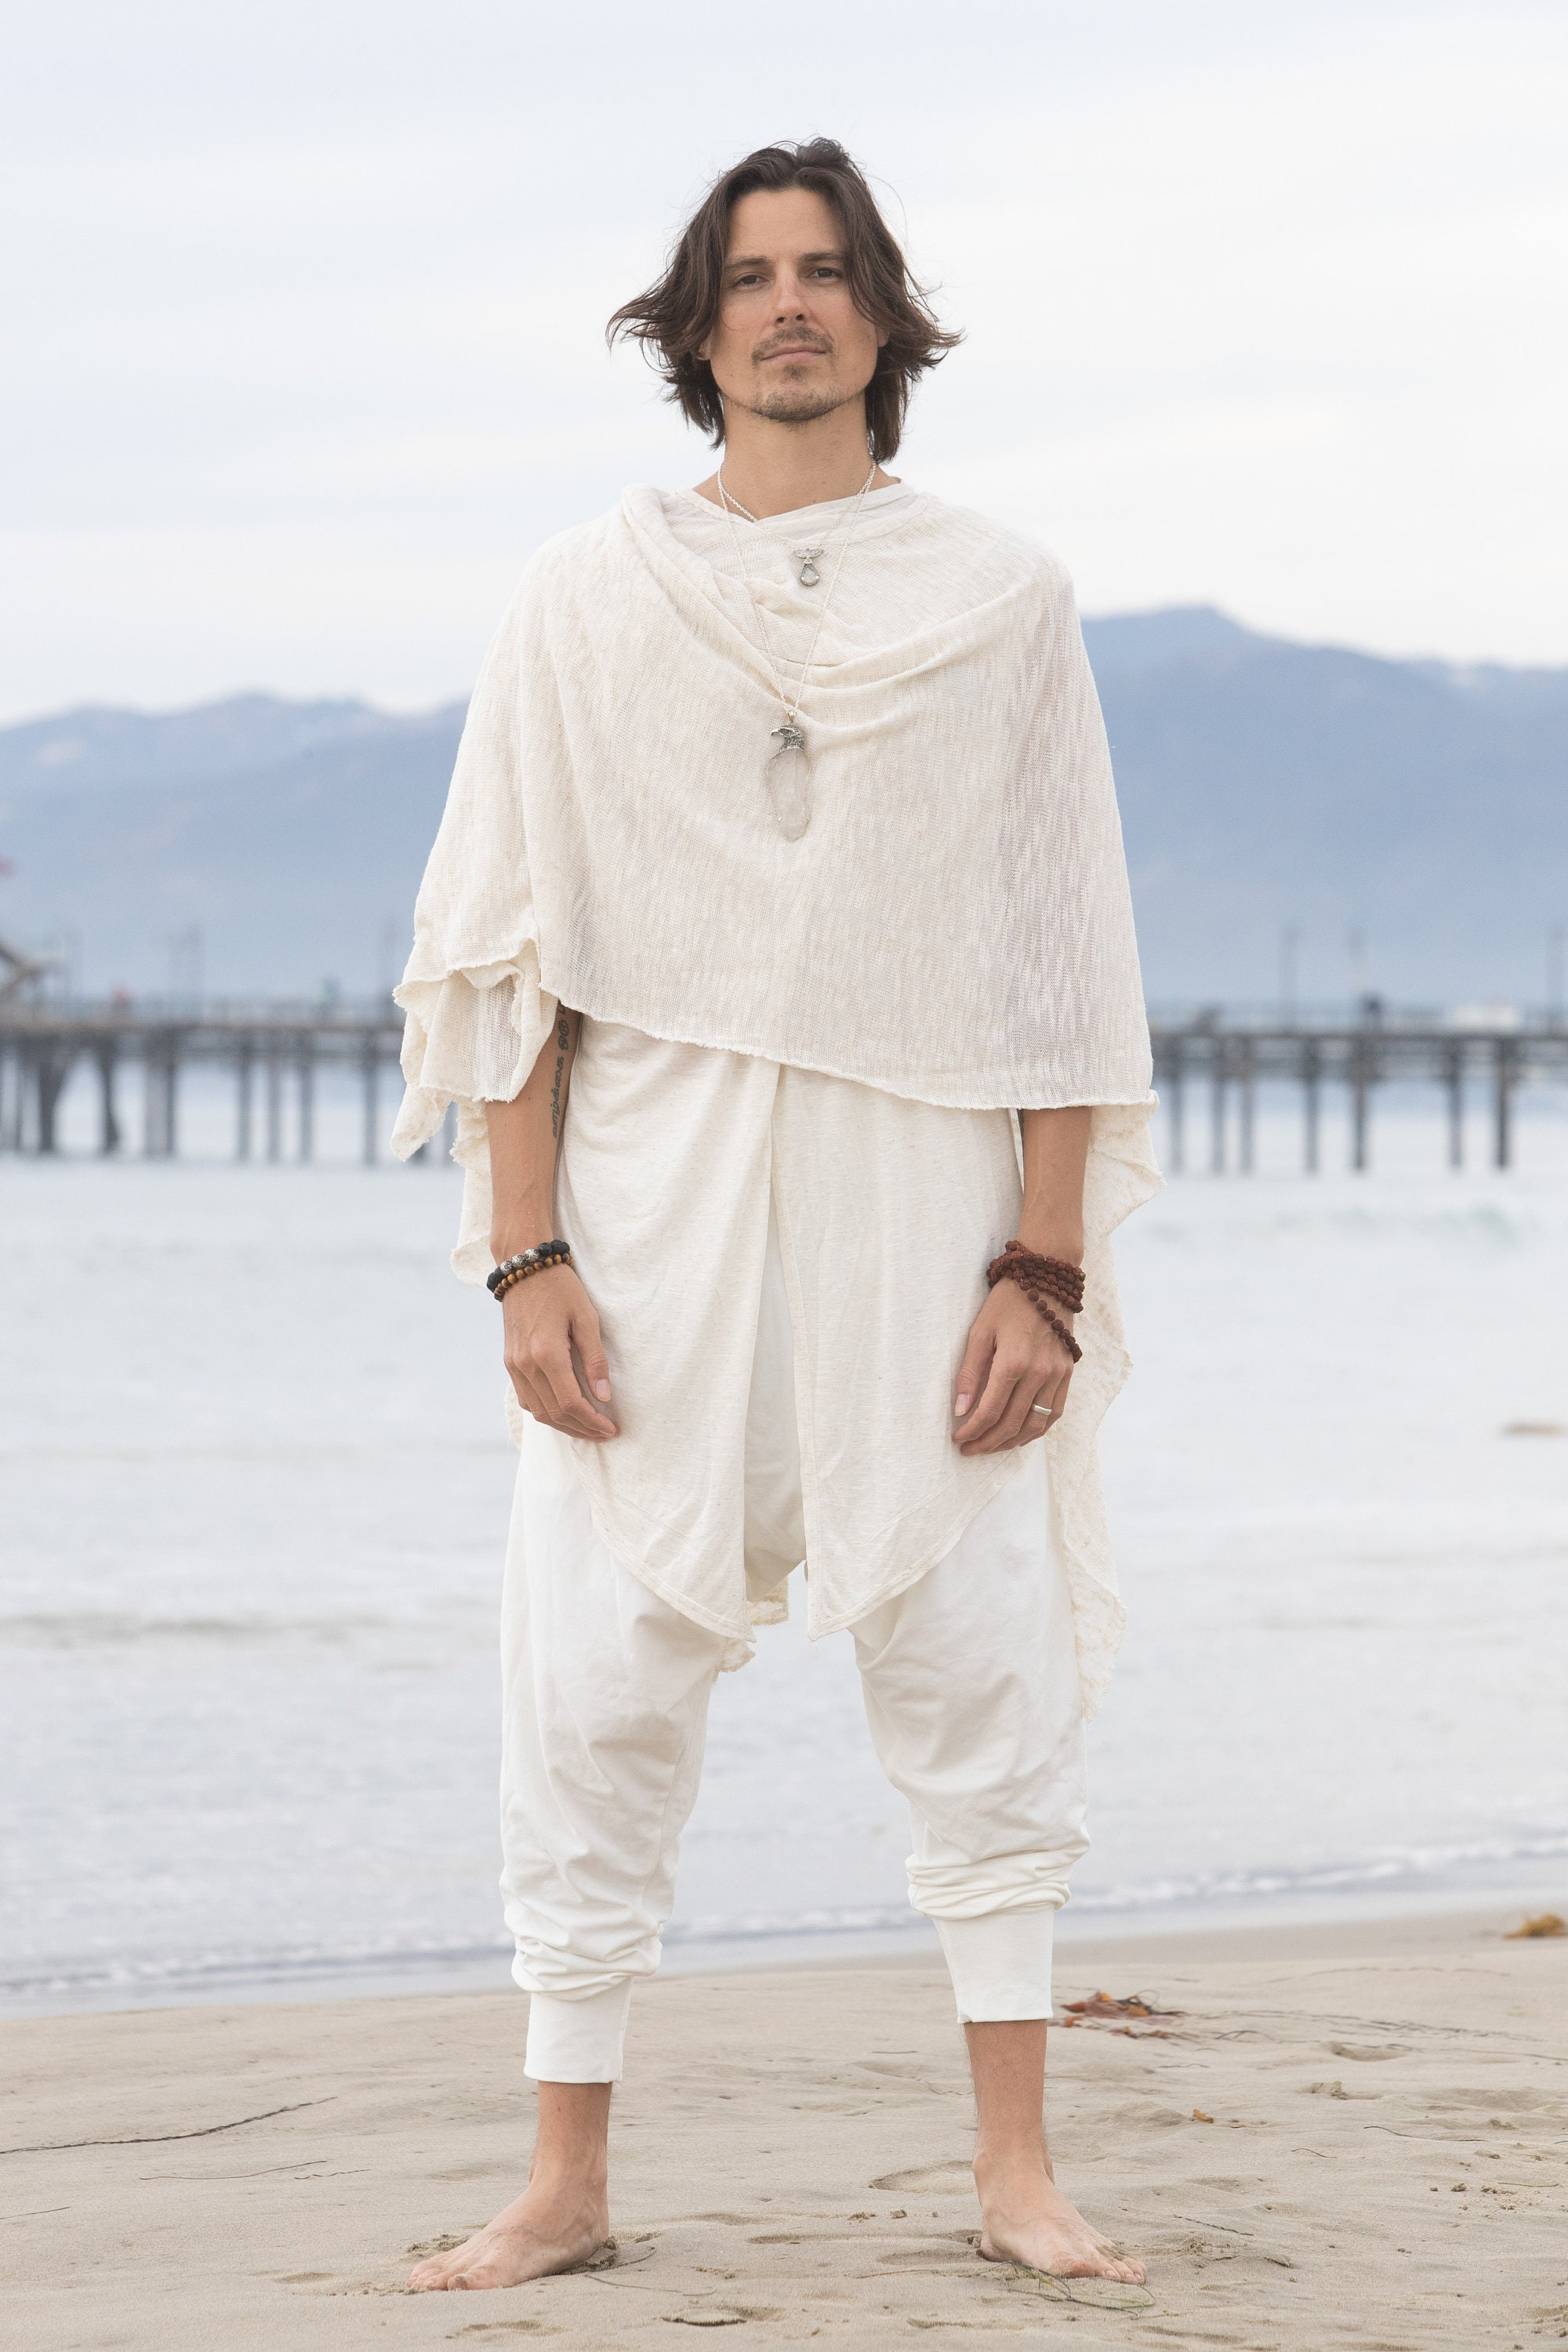 Sarouel coton homme- Vêtement Yoga eco-responsable - Kundal Yoga